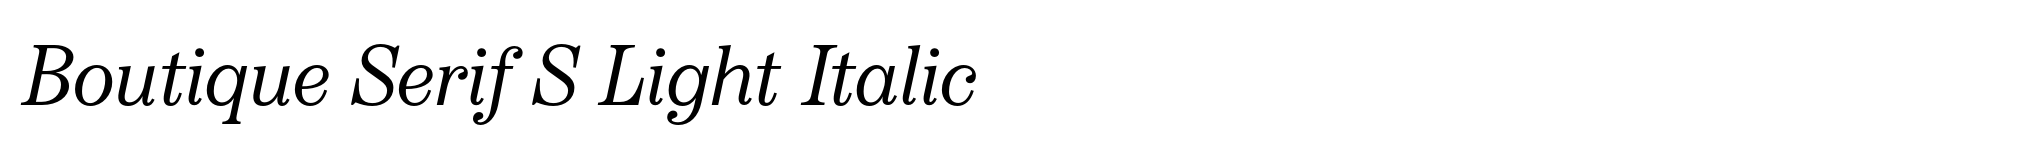 Boutique Serif S Light Italic image